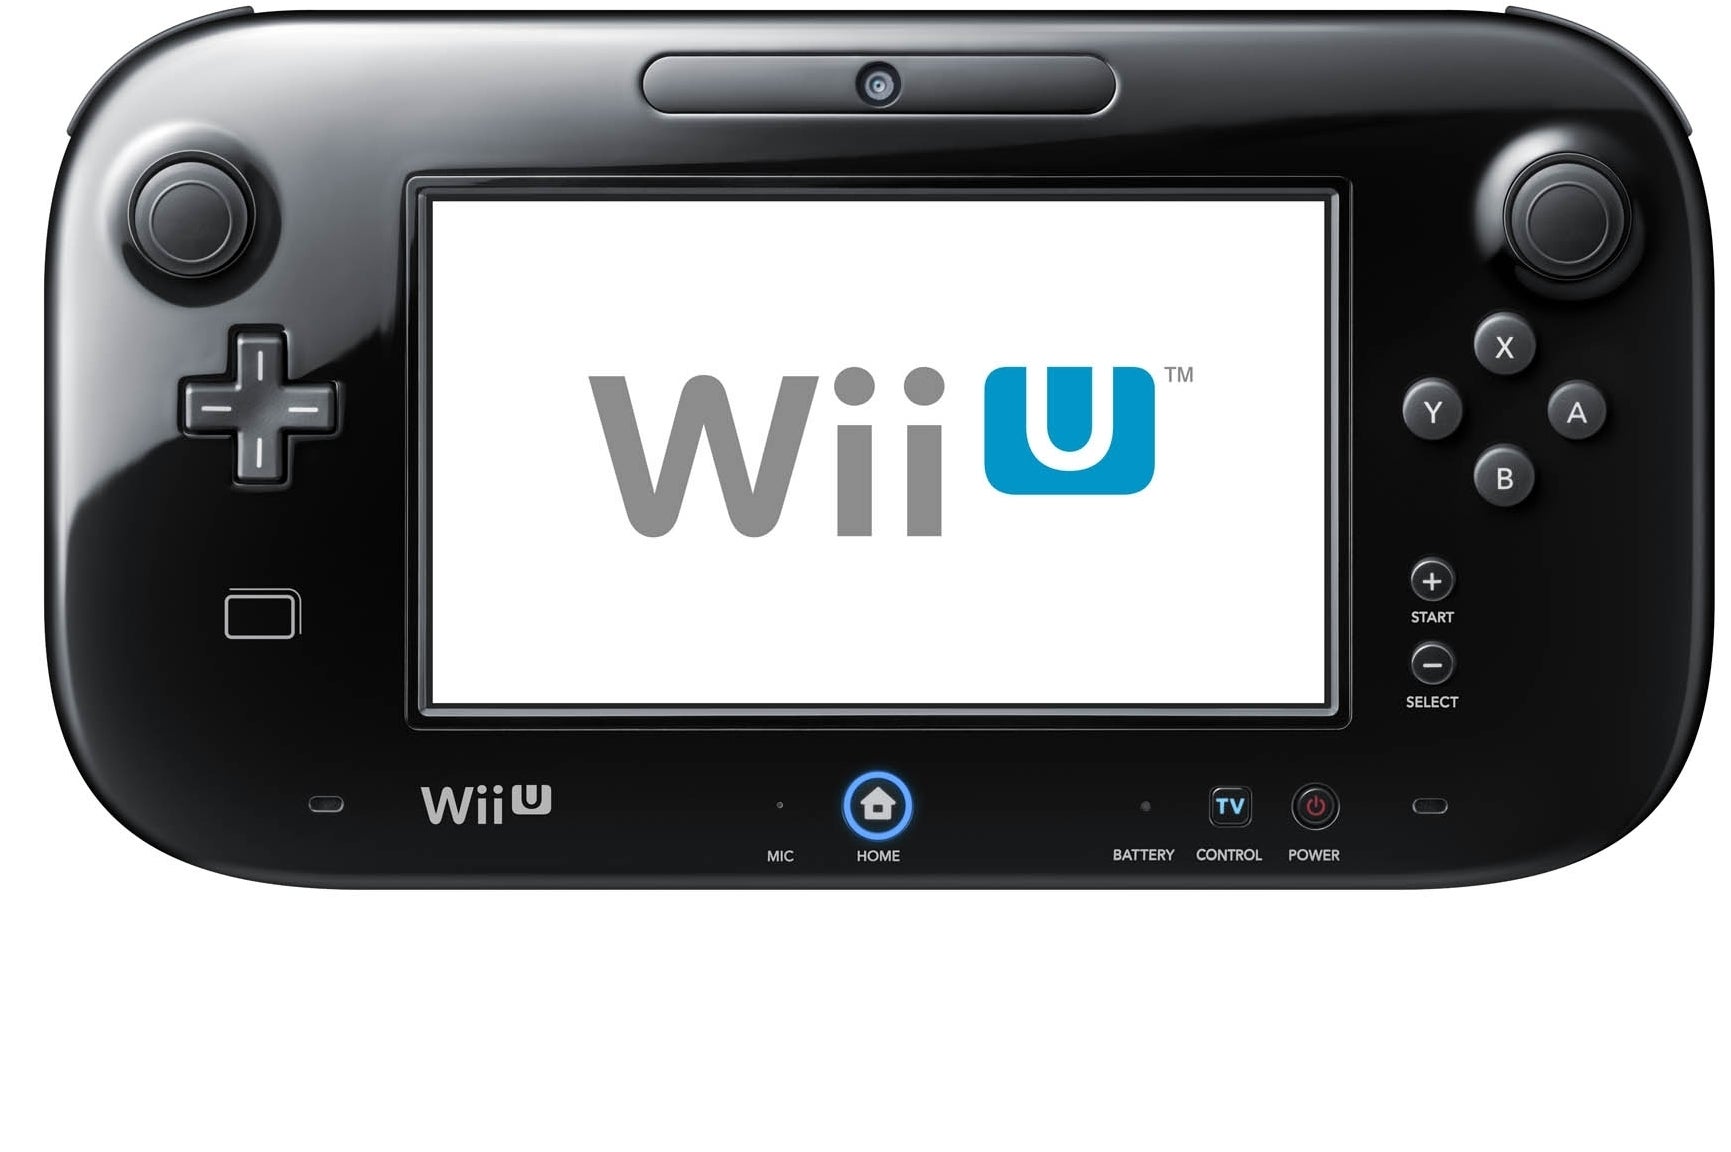 alledaags catalogus logica Nintendo Wii U GamePad - more responsive than your TV? | Eurogamer.net